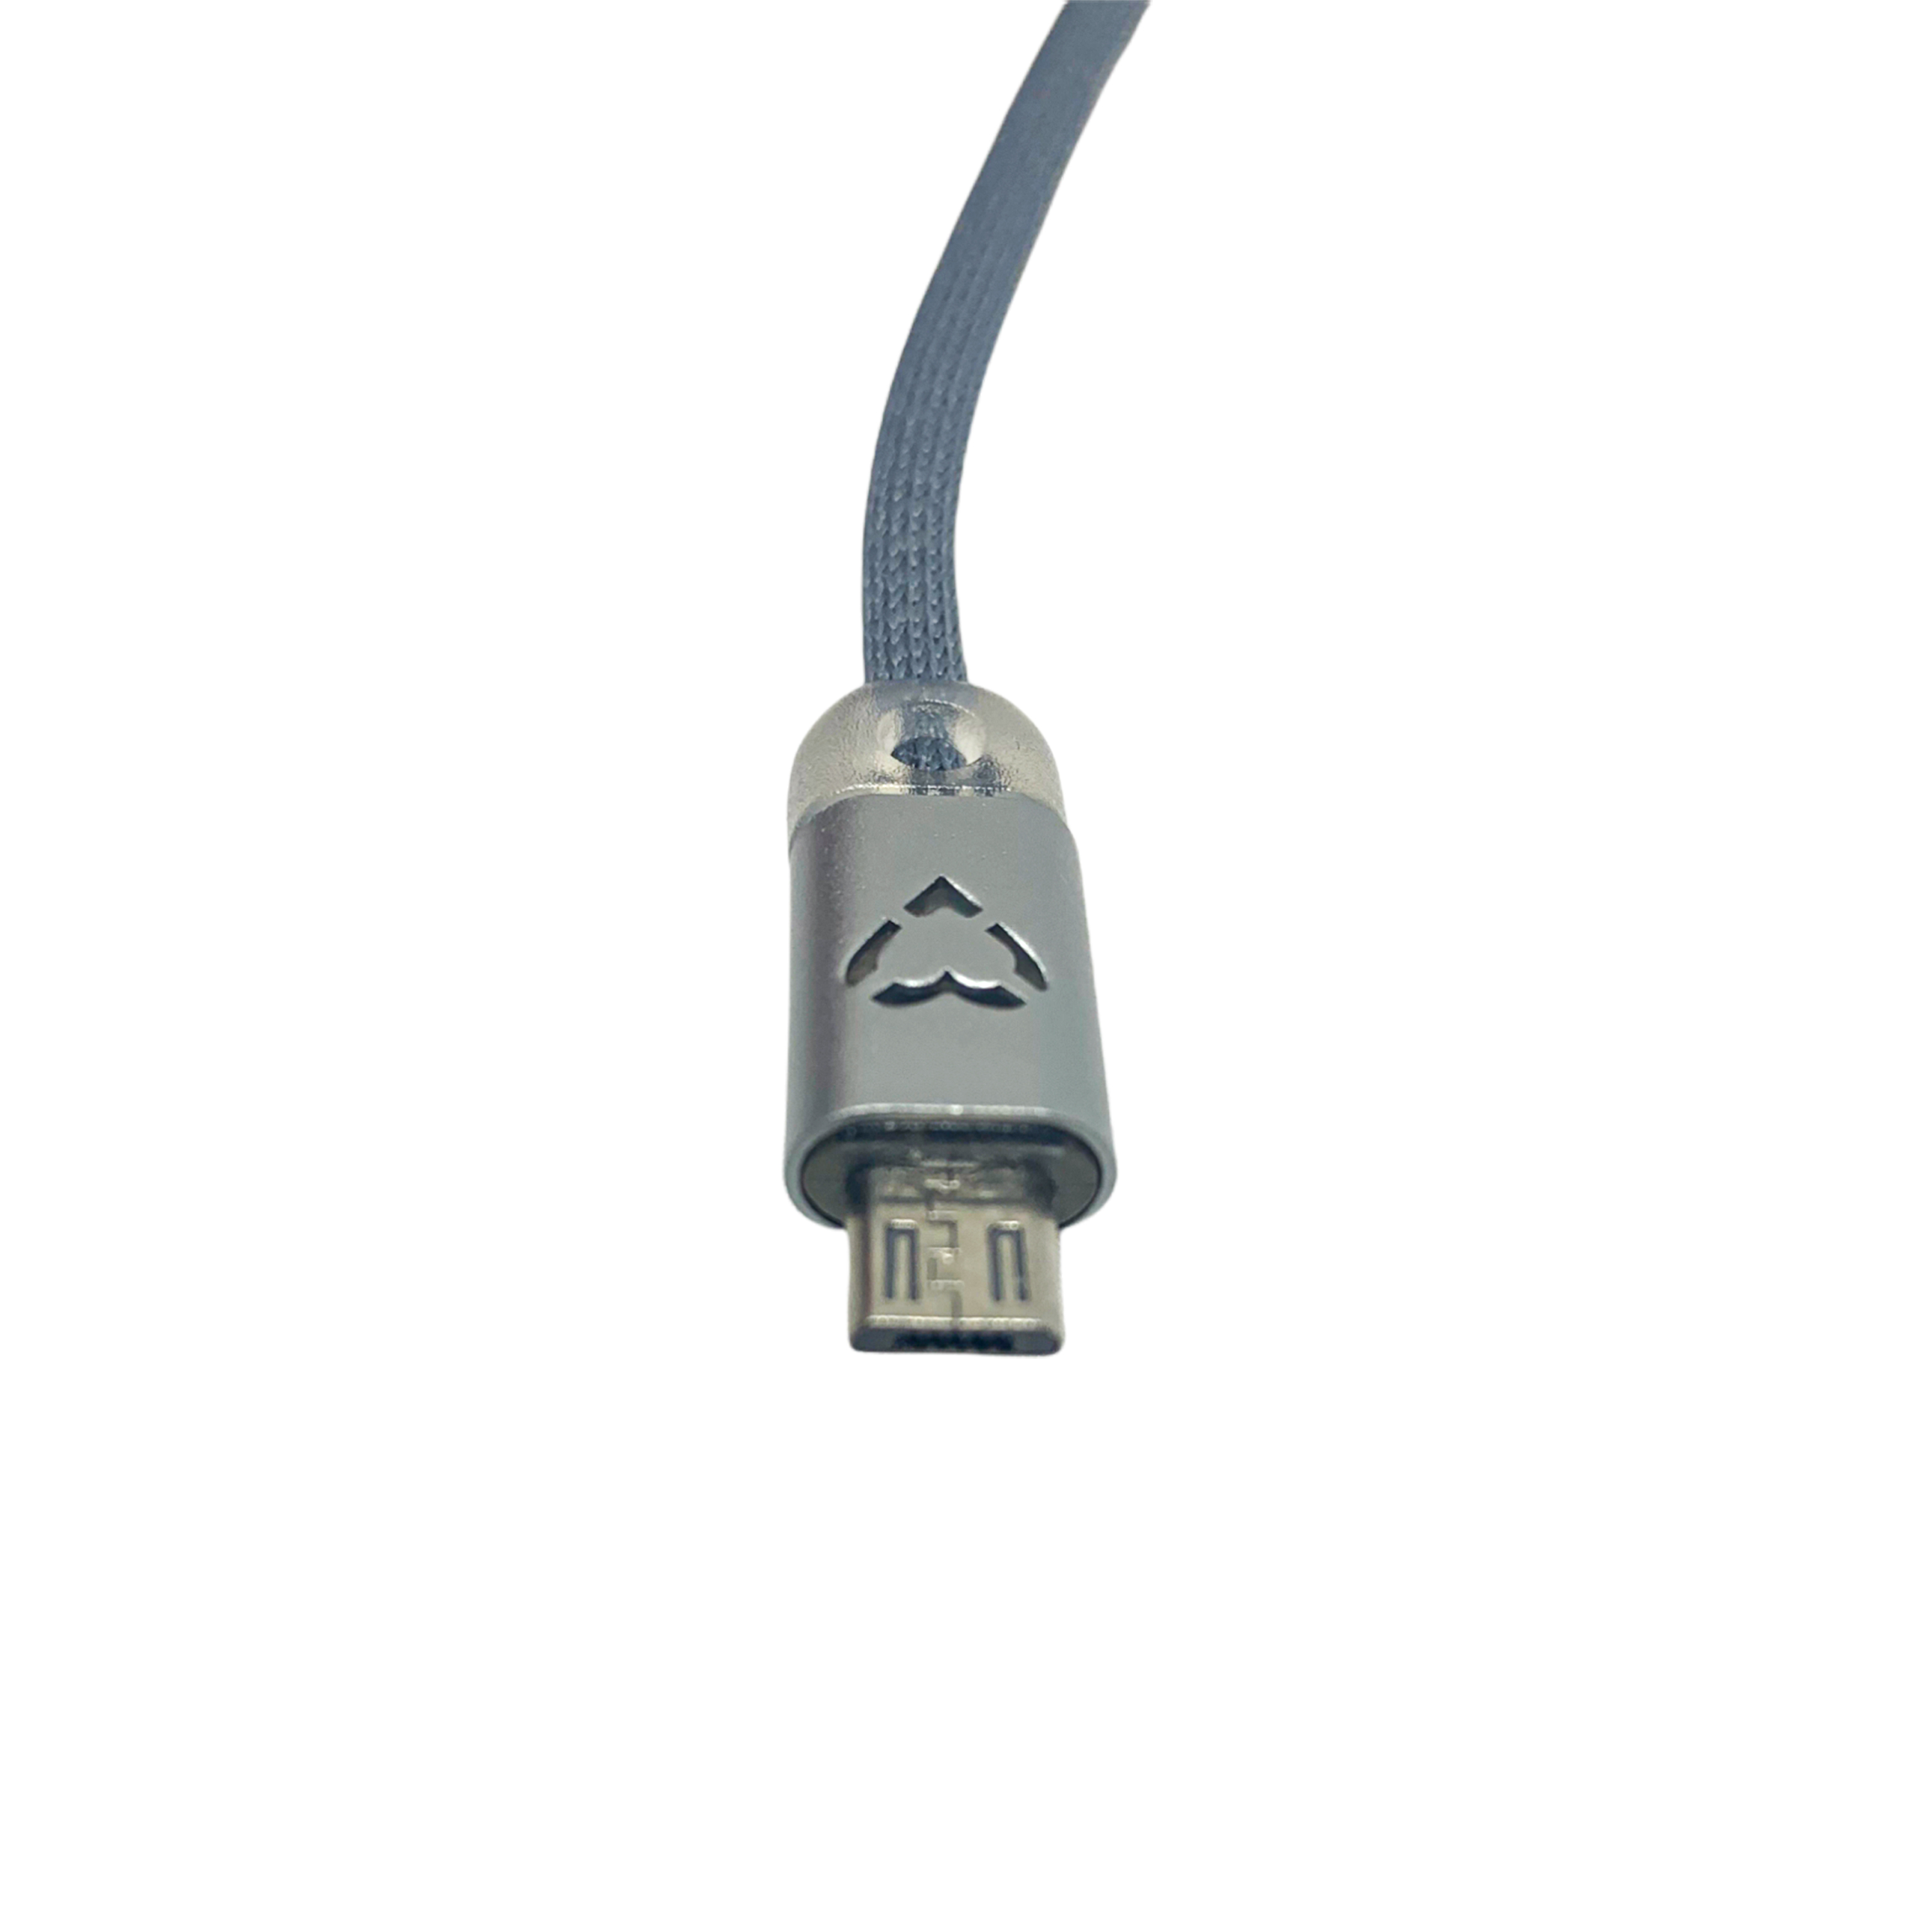 mit Micro Nylon Ladekabel, HBASICS Meter Licht, USB 1 Silberfarbe Datenkabel